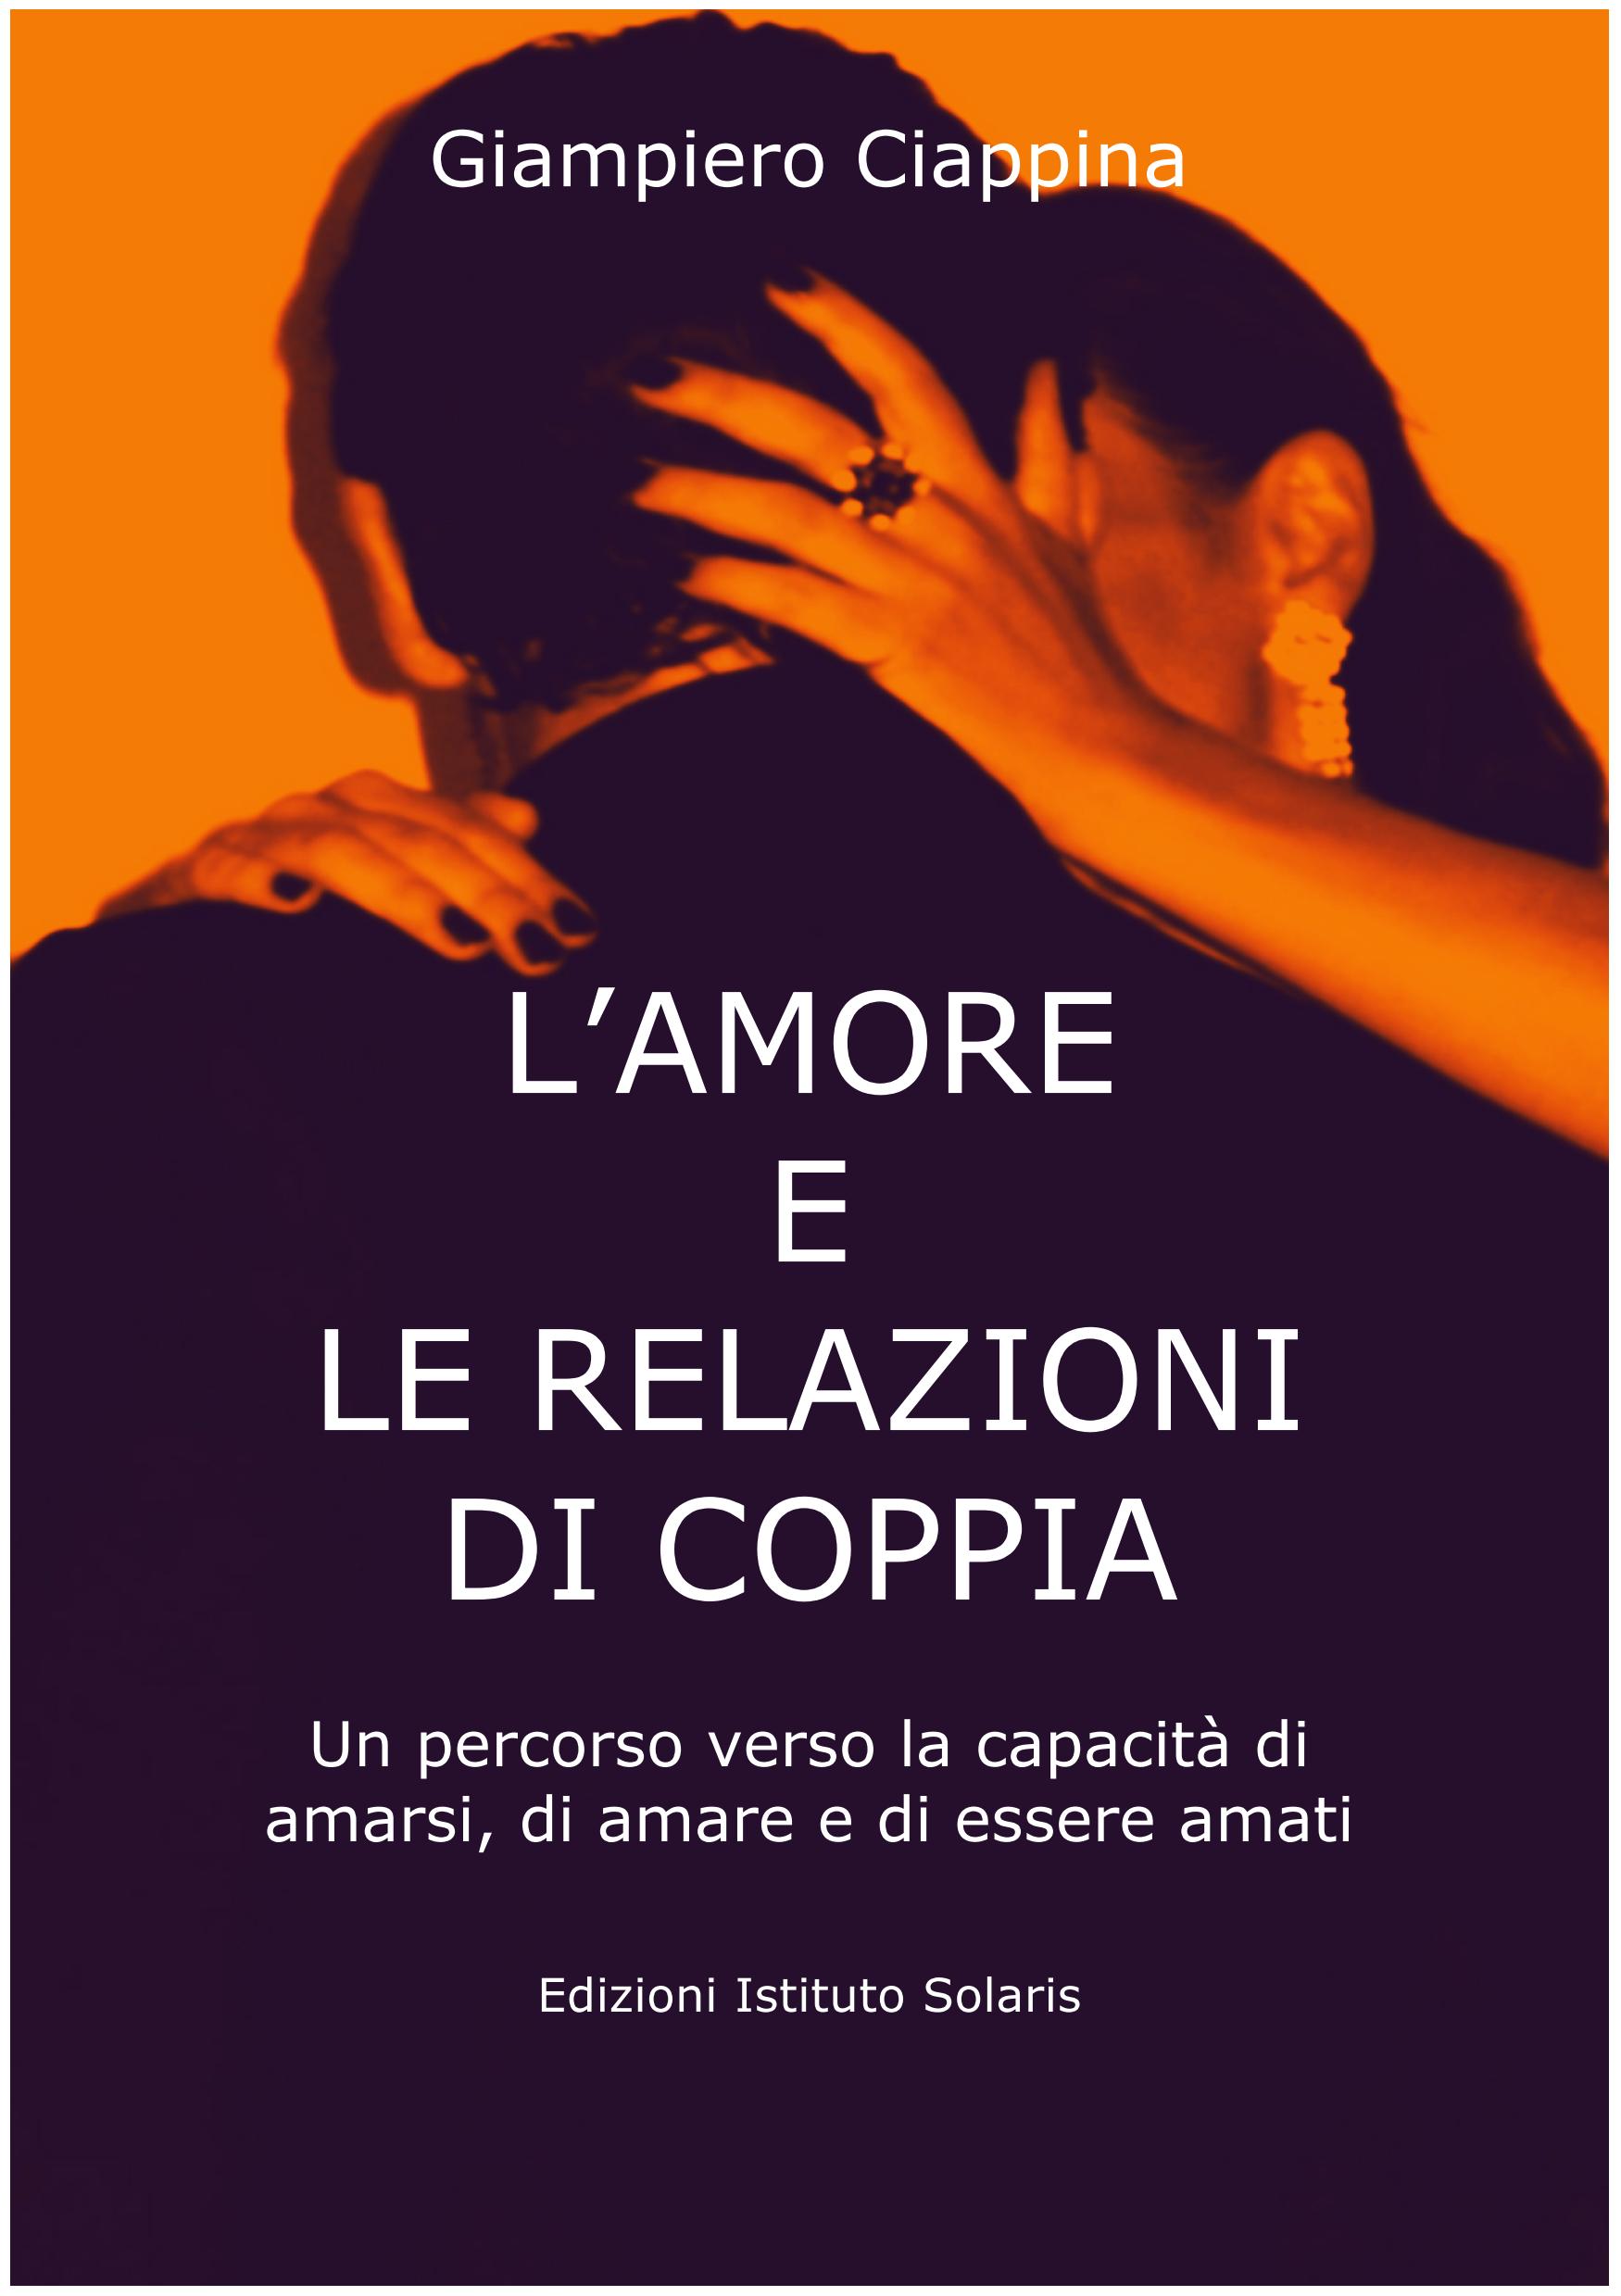 Copertina_AeRdC_Scuola Counseling Roma